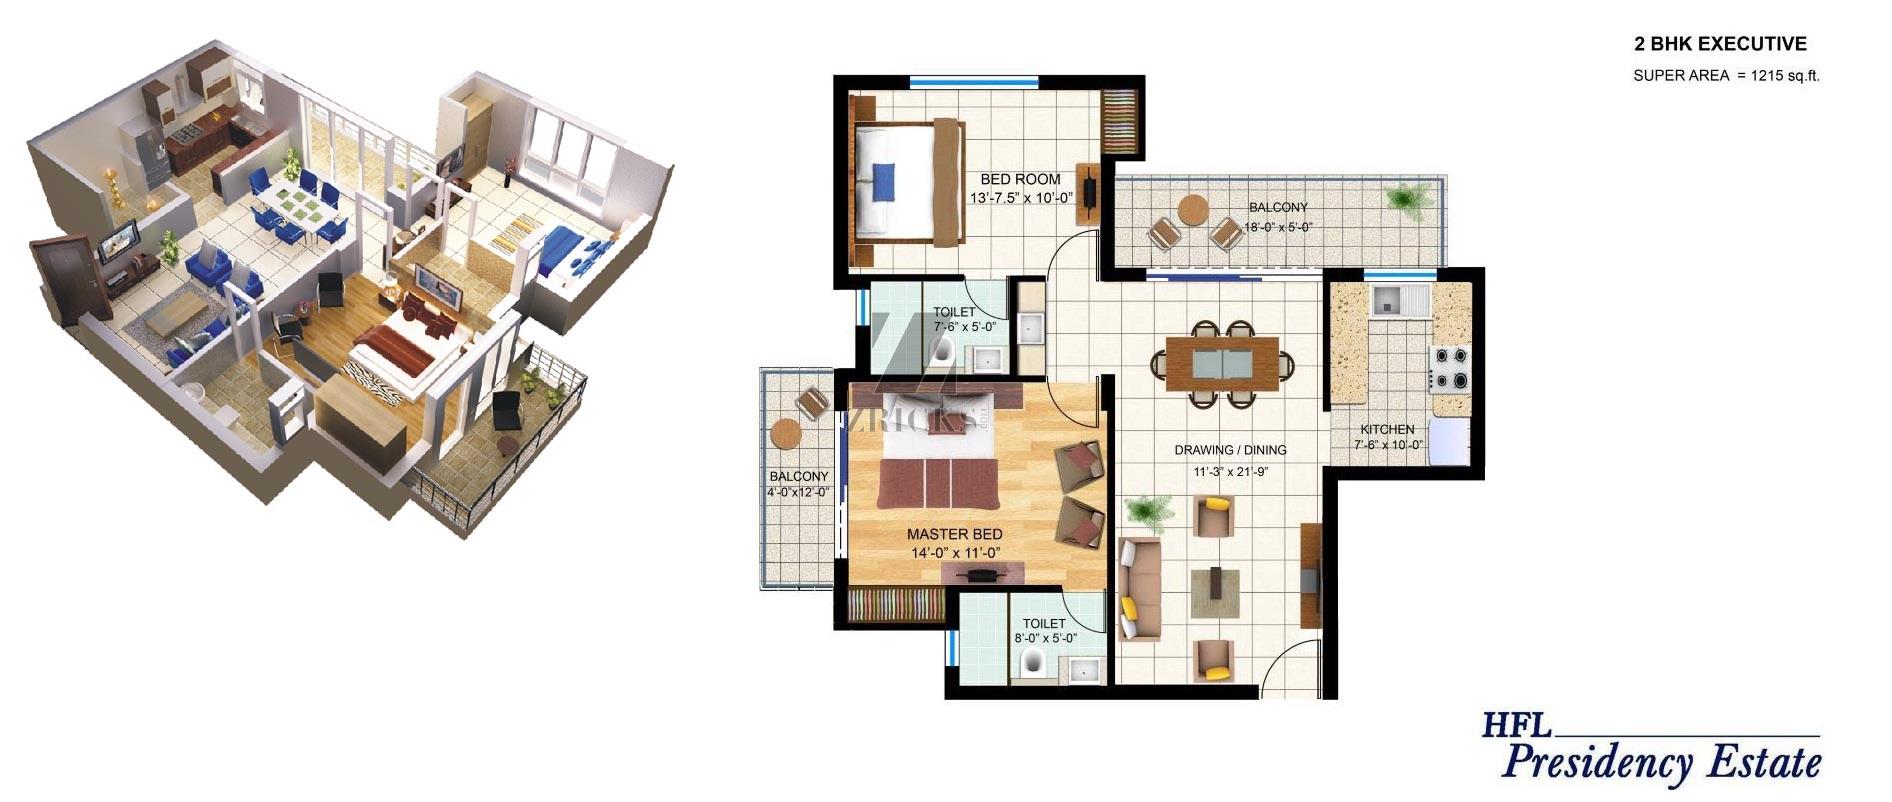 HFL Presidency Estate Floor Plan